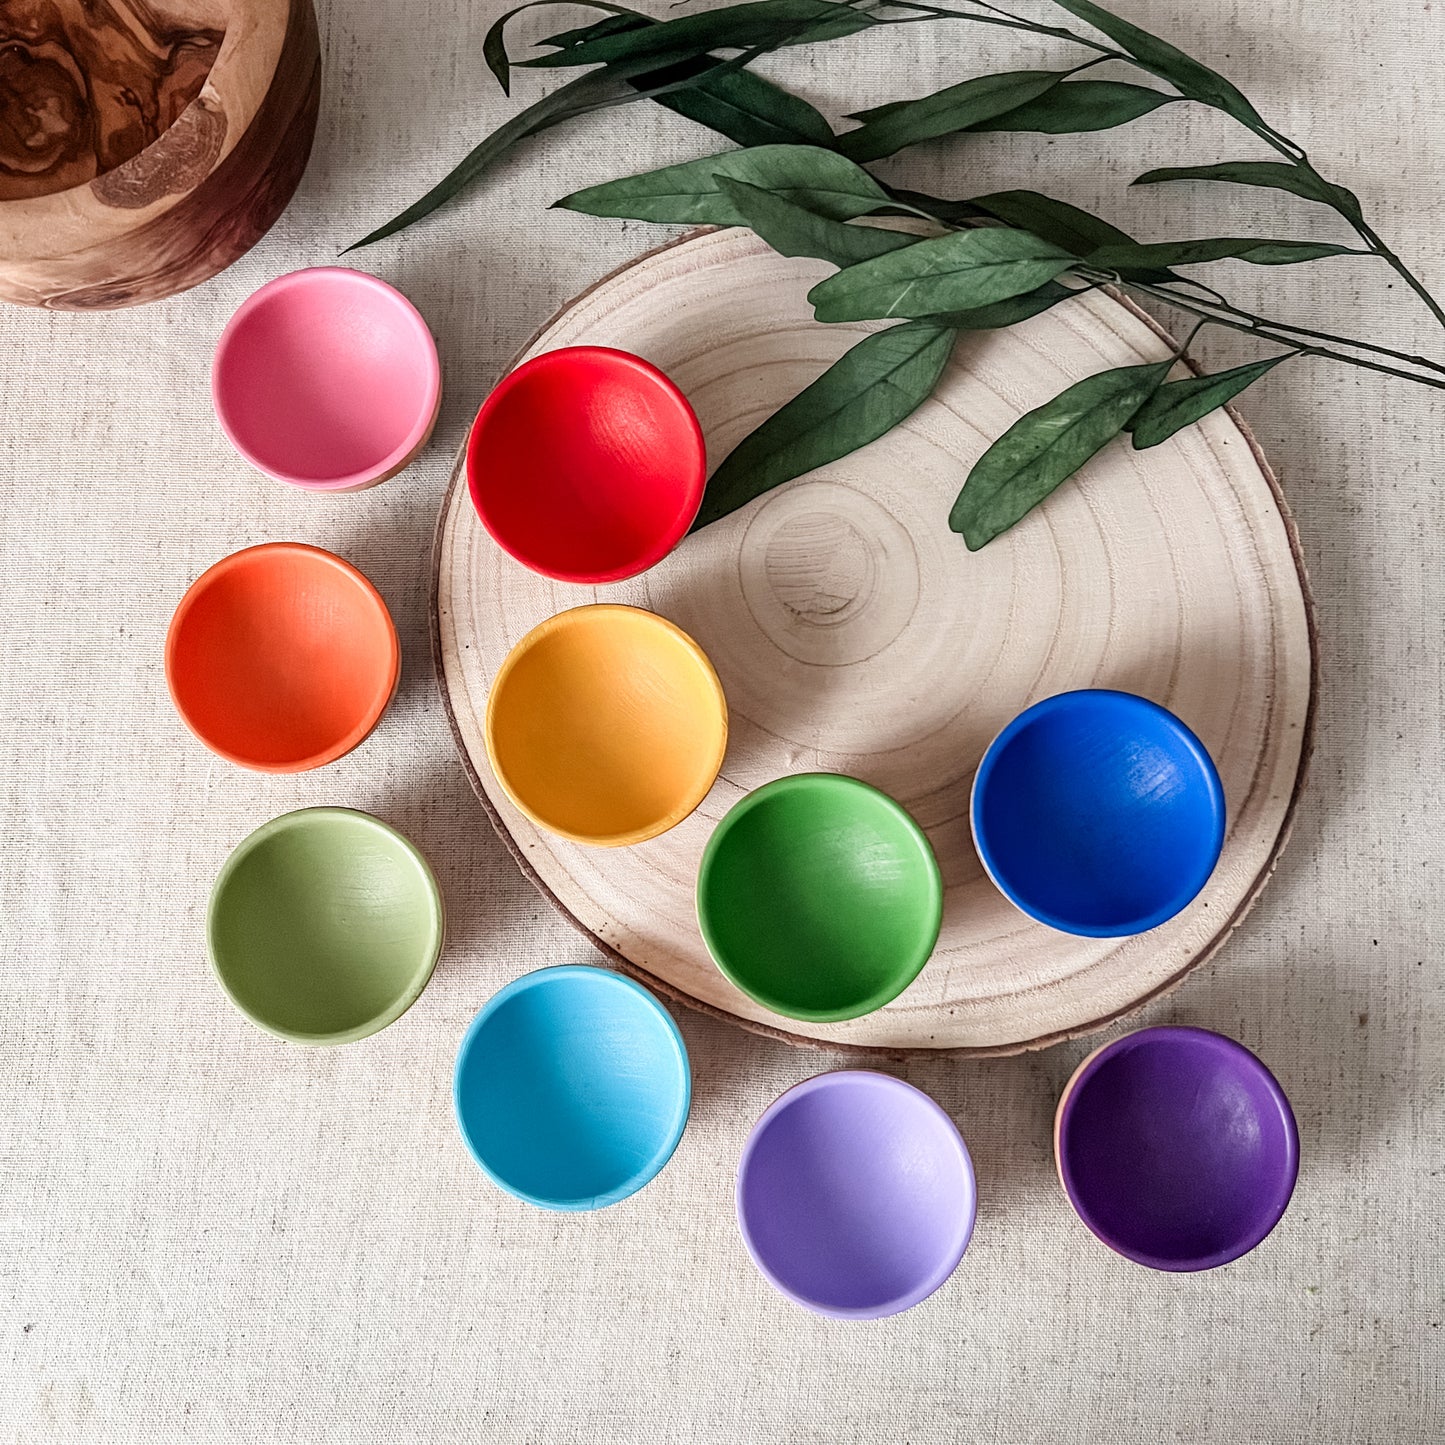 10 Rainbow Wooden Sorting Bowls